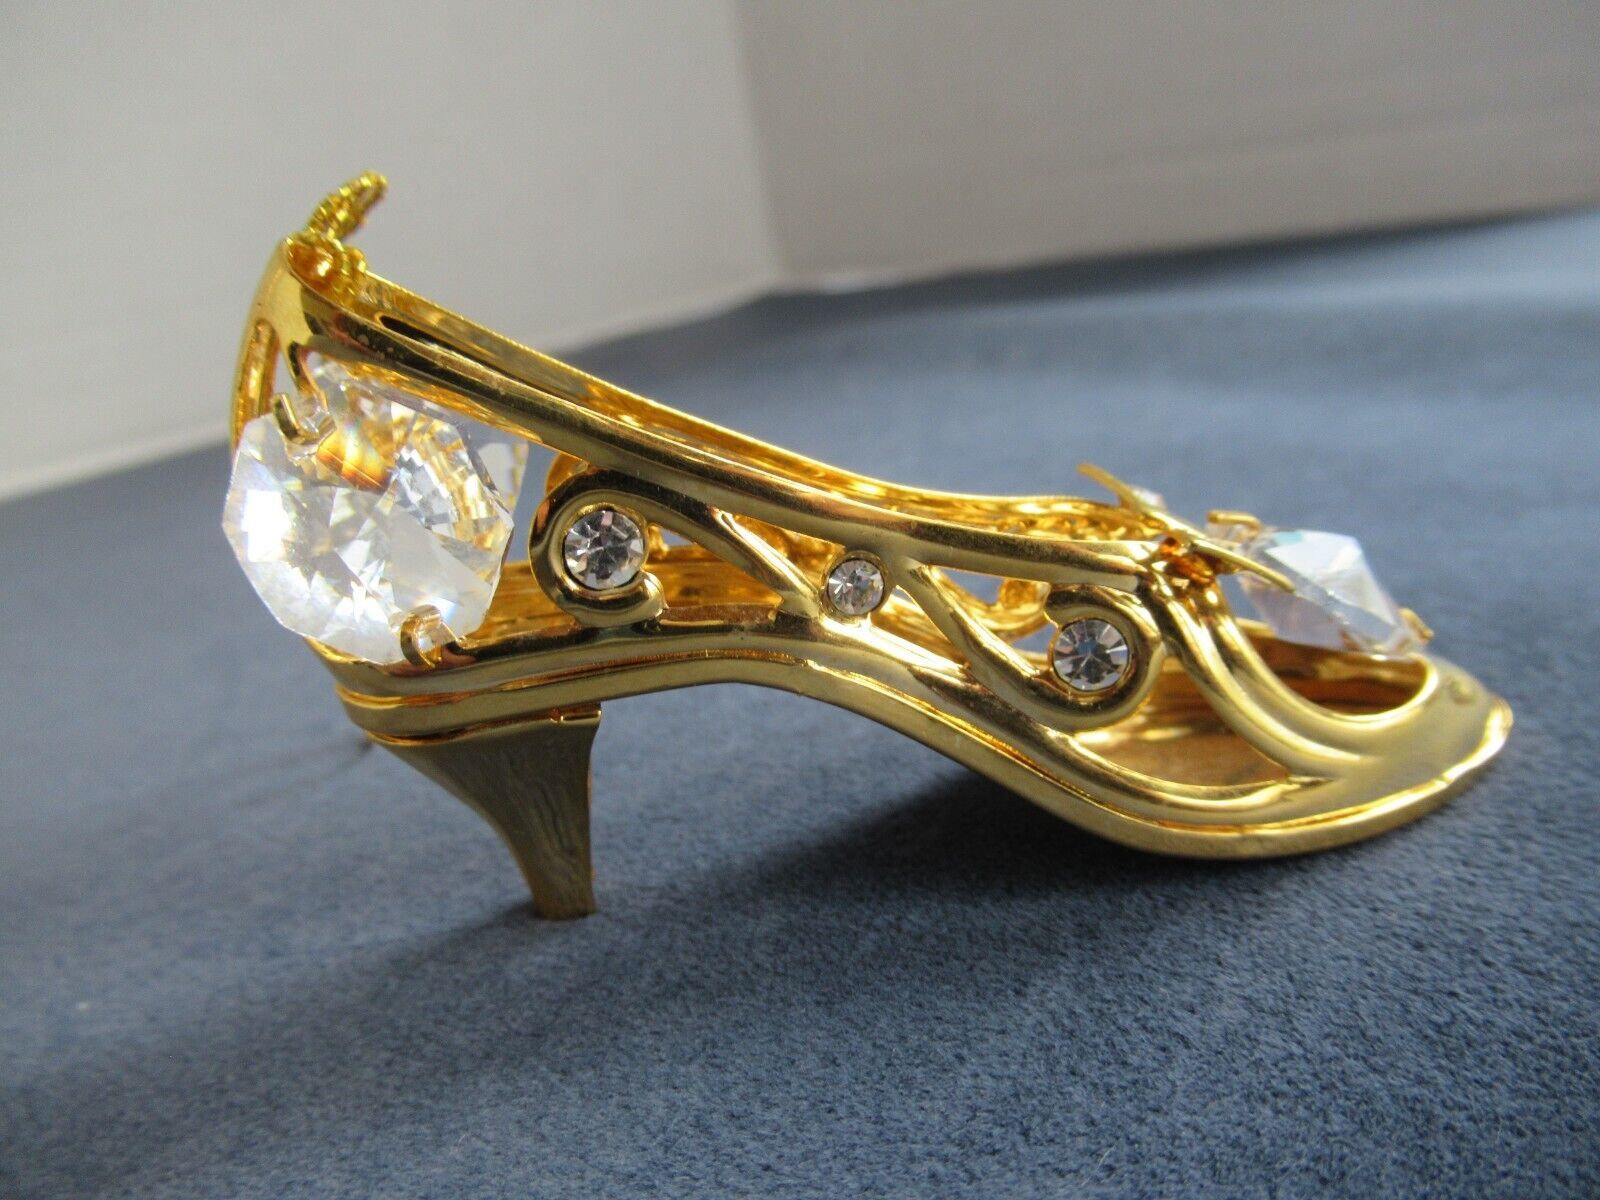 Swarovski crystal Charming Temptations high heel shoe tree ornament KG&C Austria - $21.51